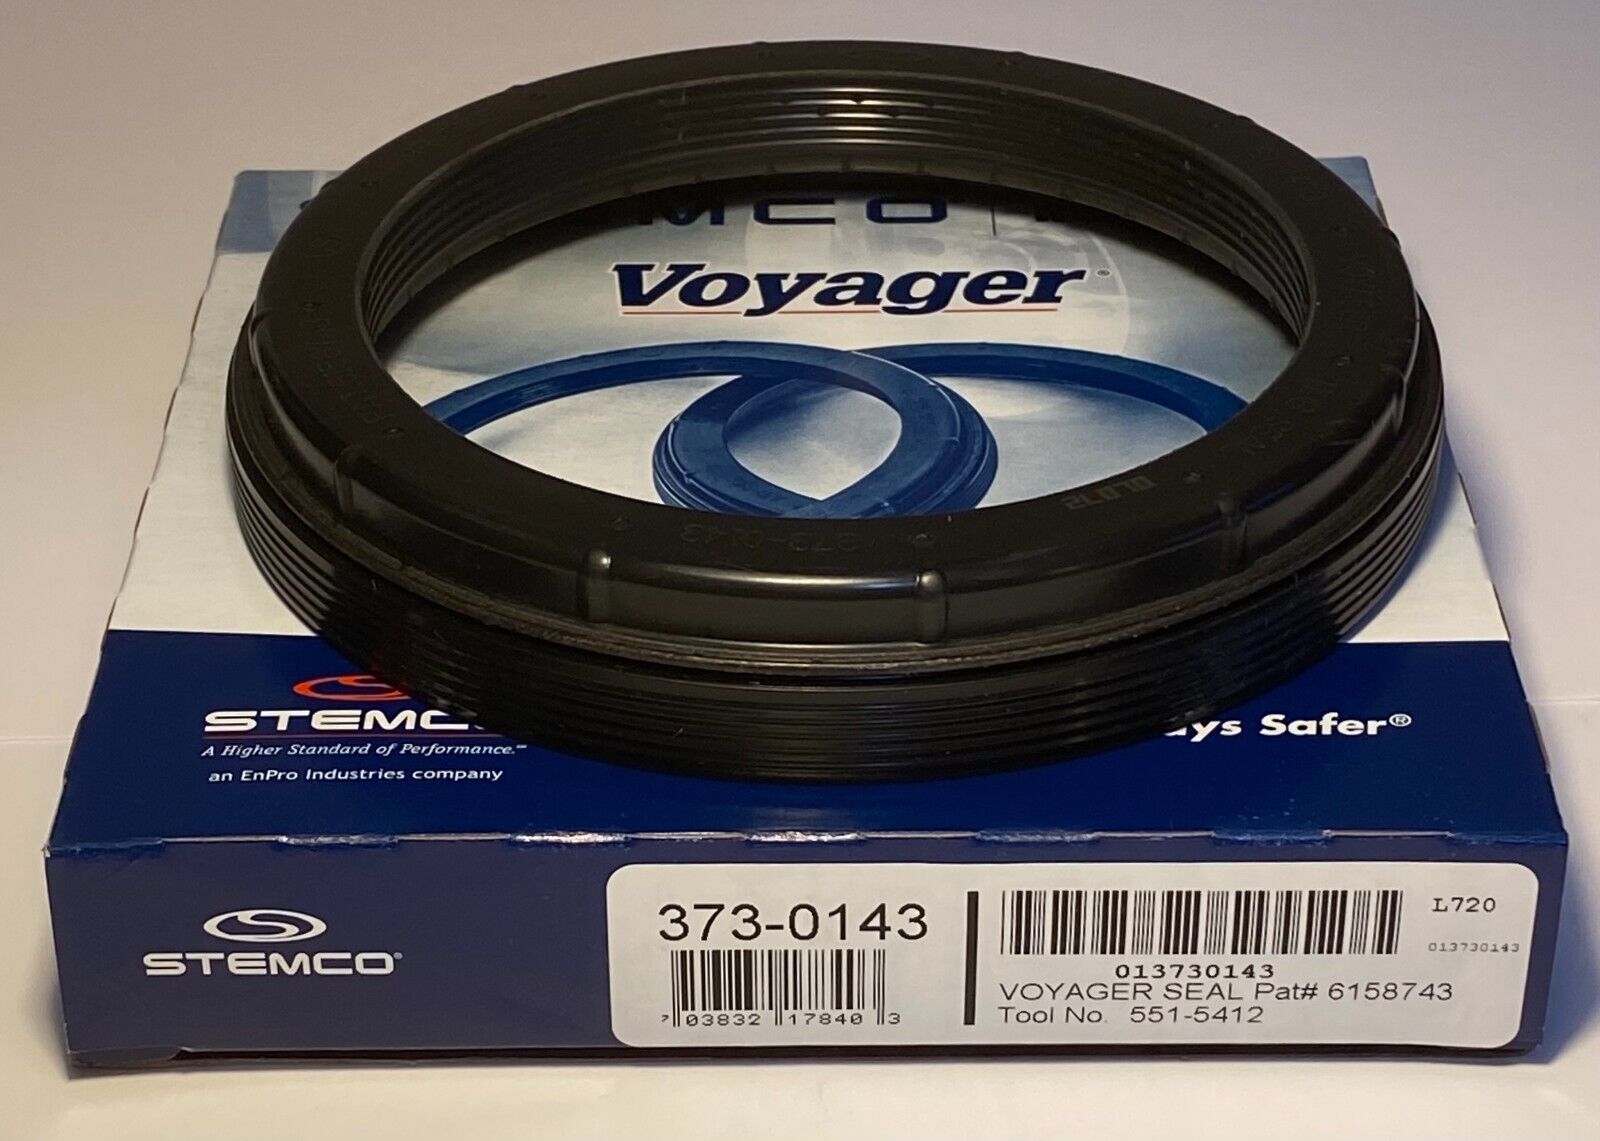 STEMCO Voyager Wheel Seal 373-0143